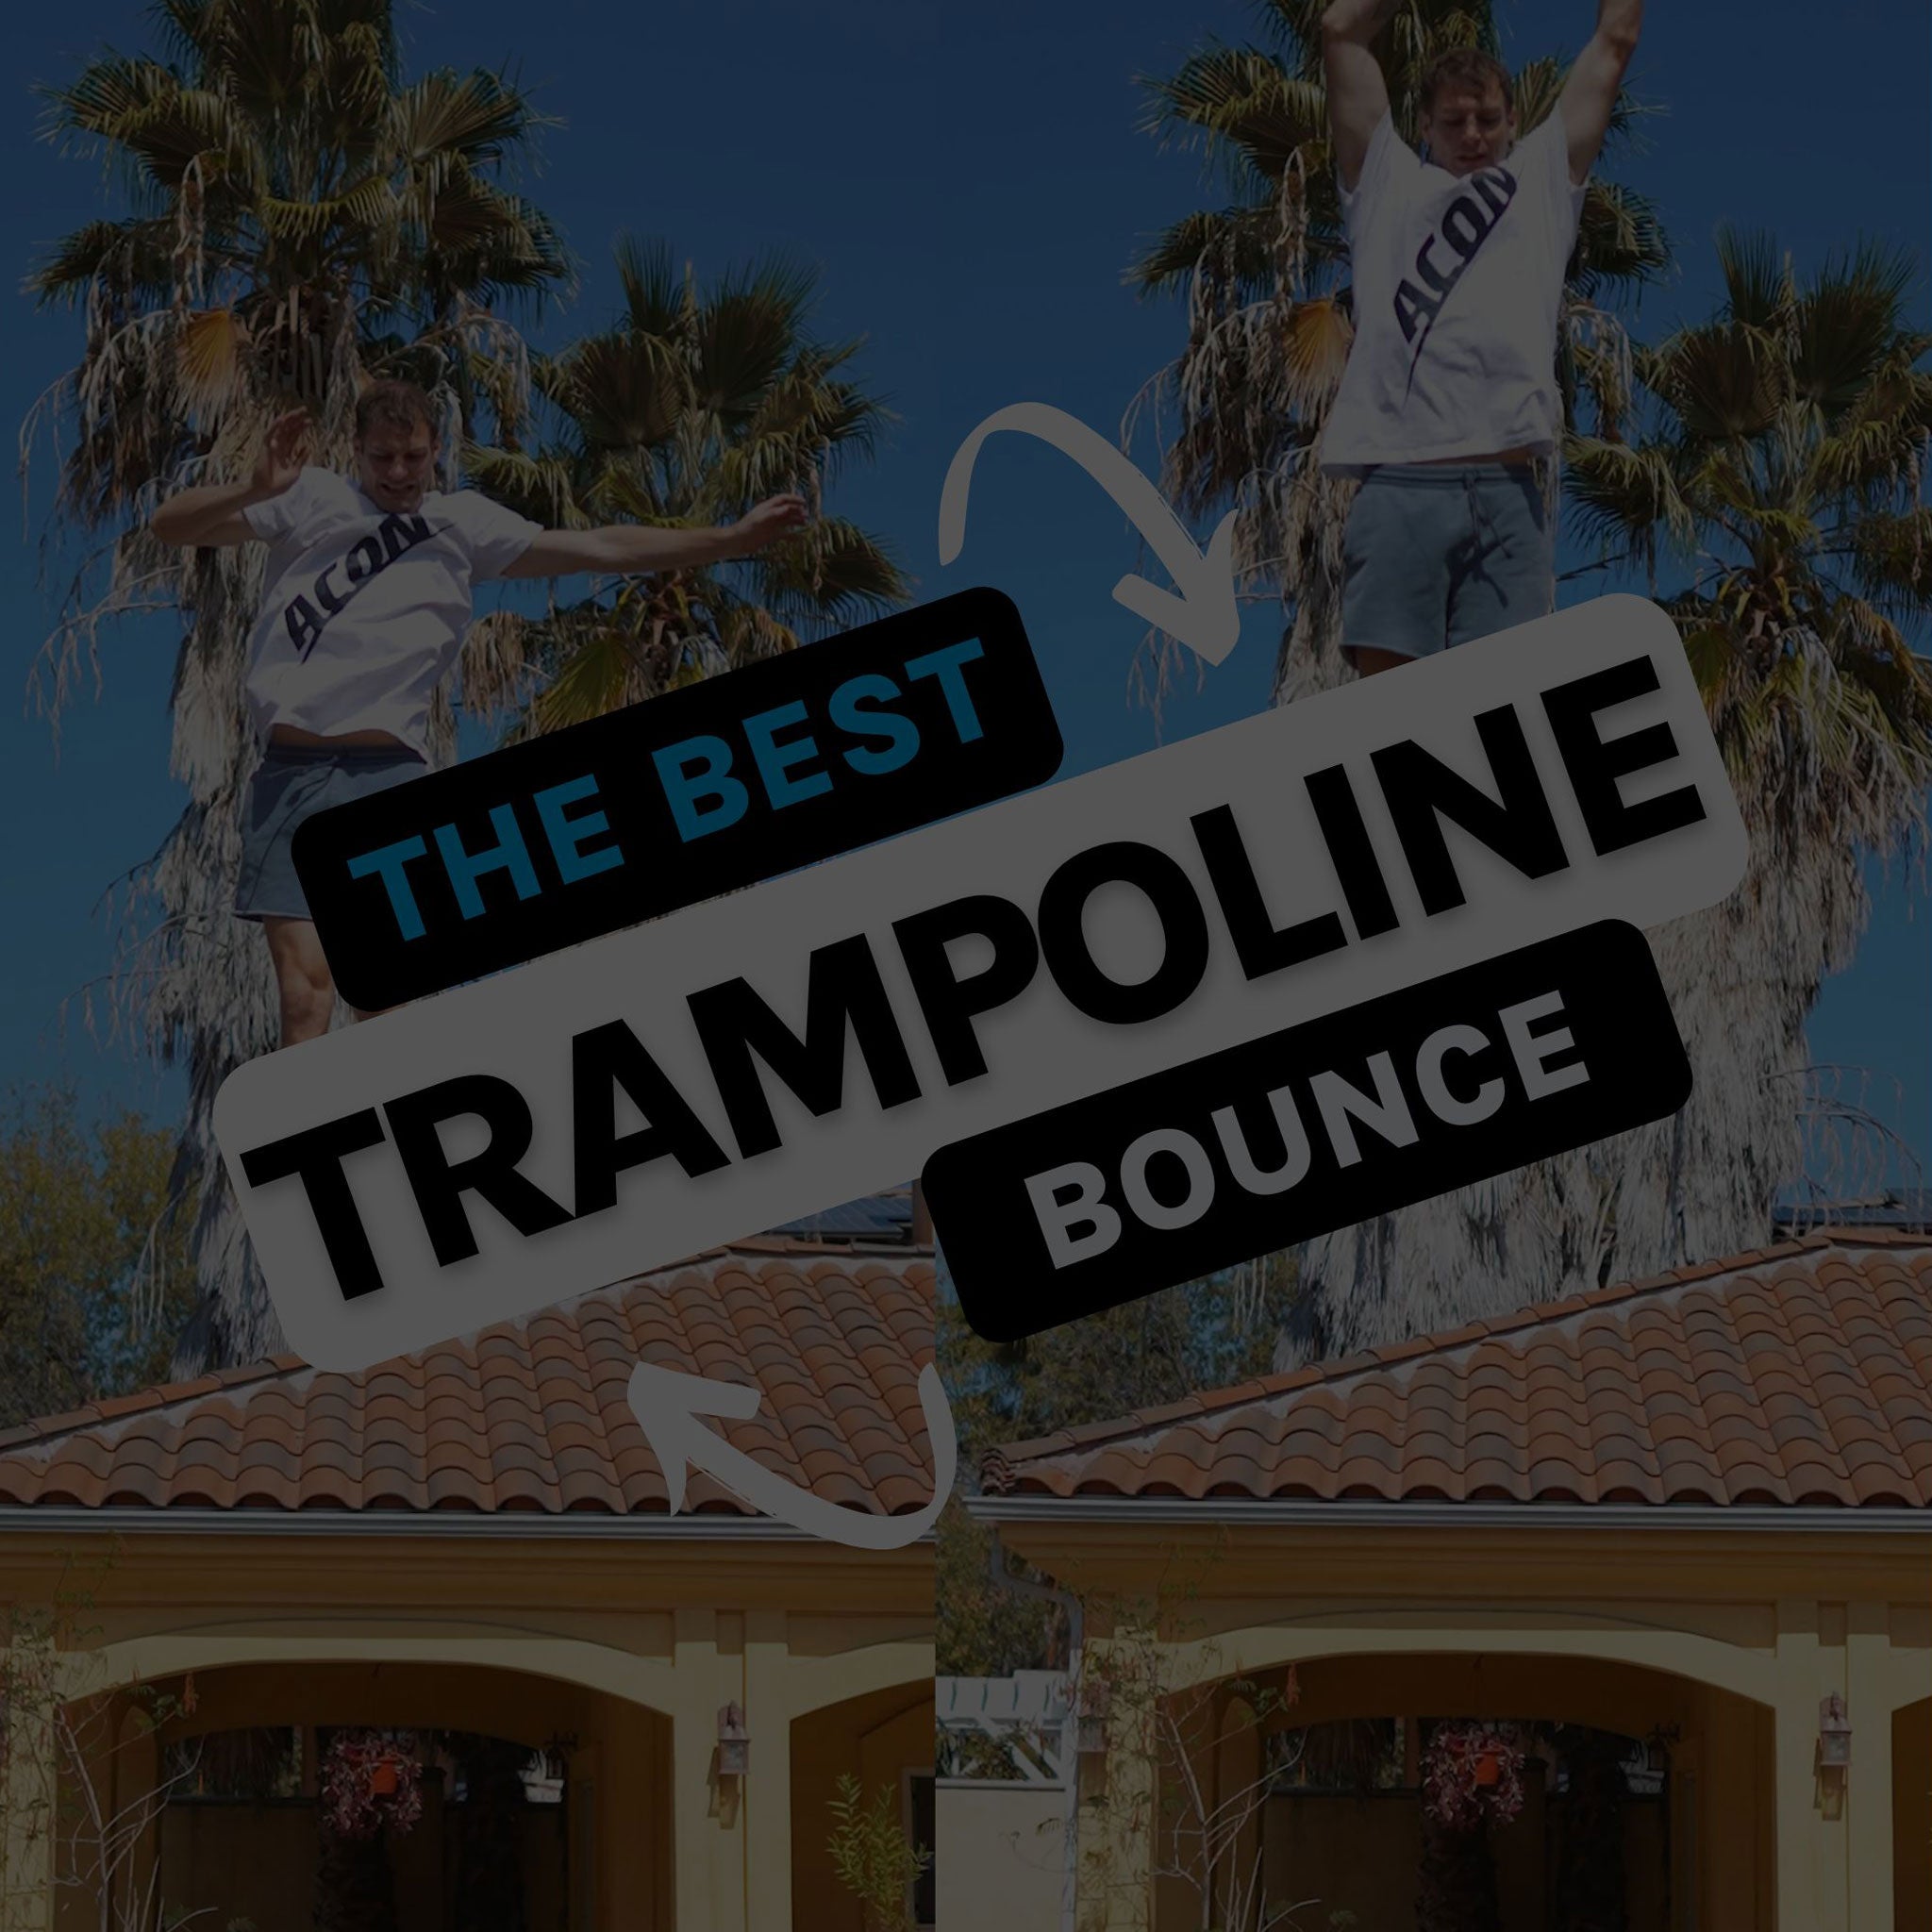 The best trampoline bounce - video still image.